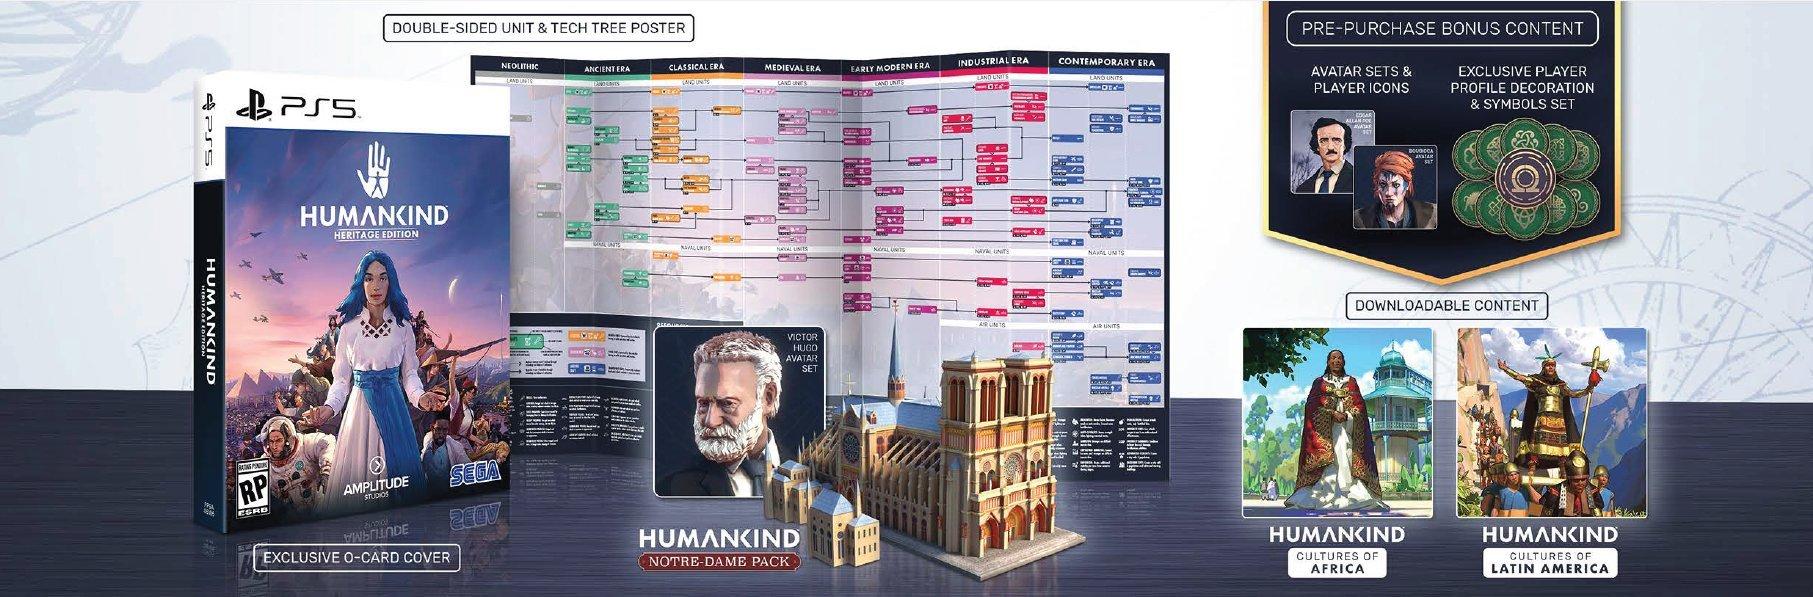 Humankind: Heritage Edition - PlayStation 5